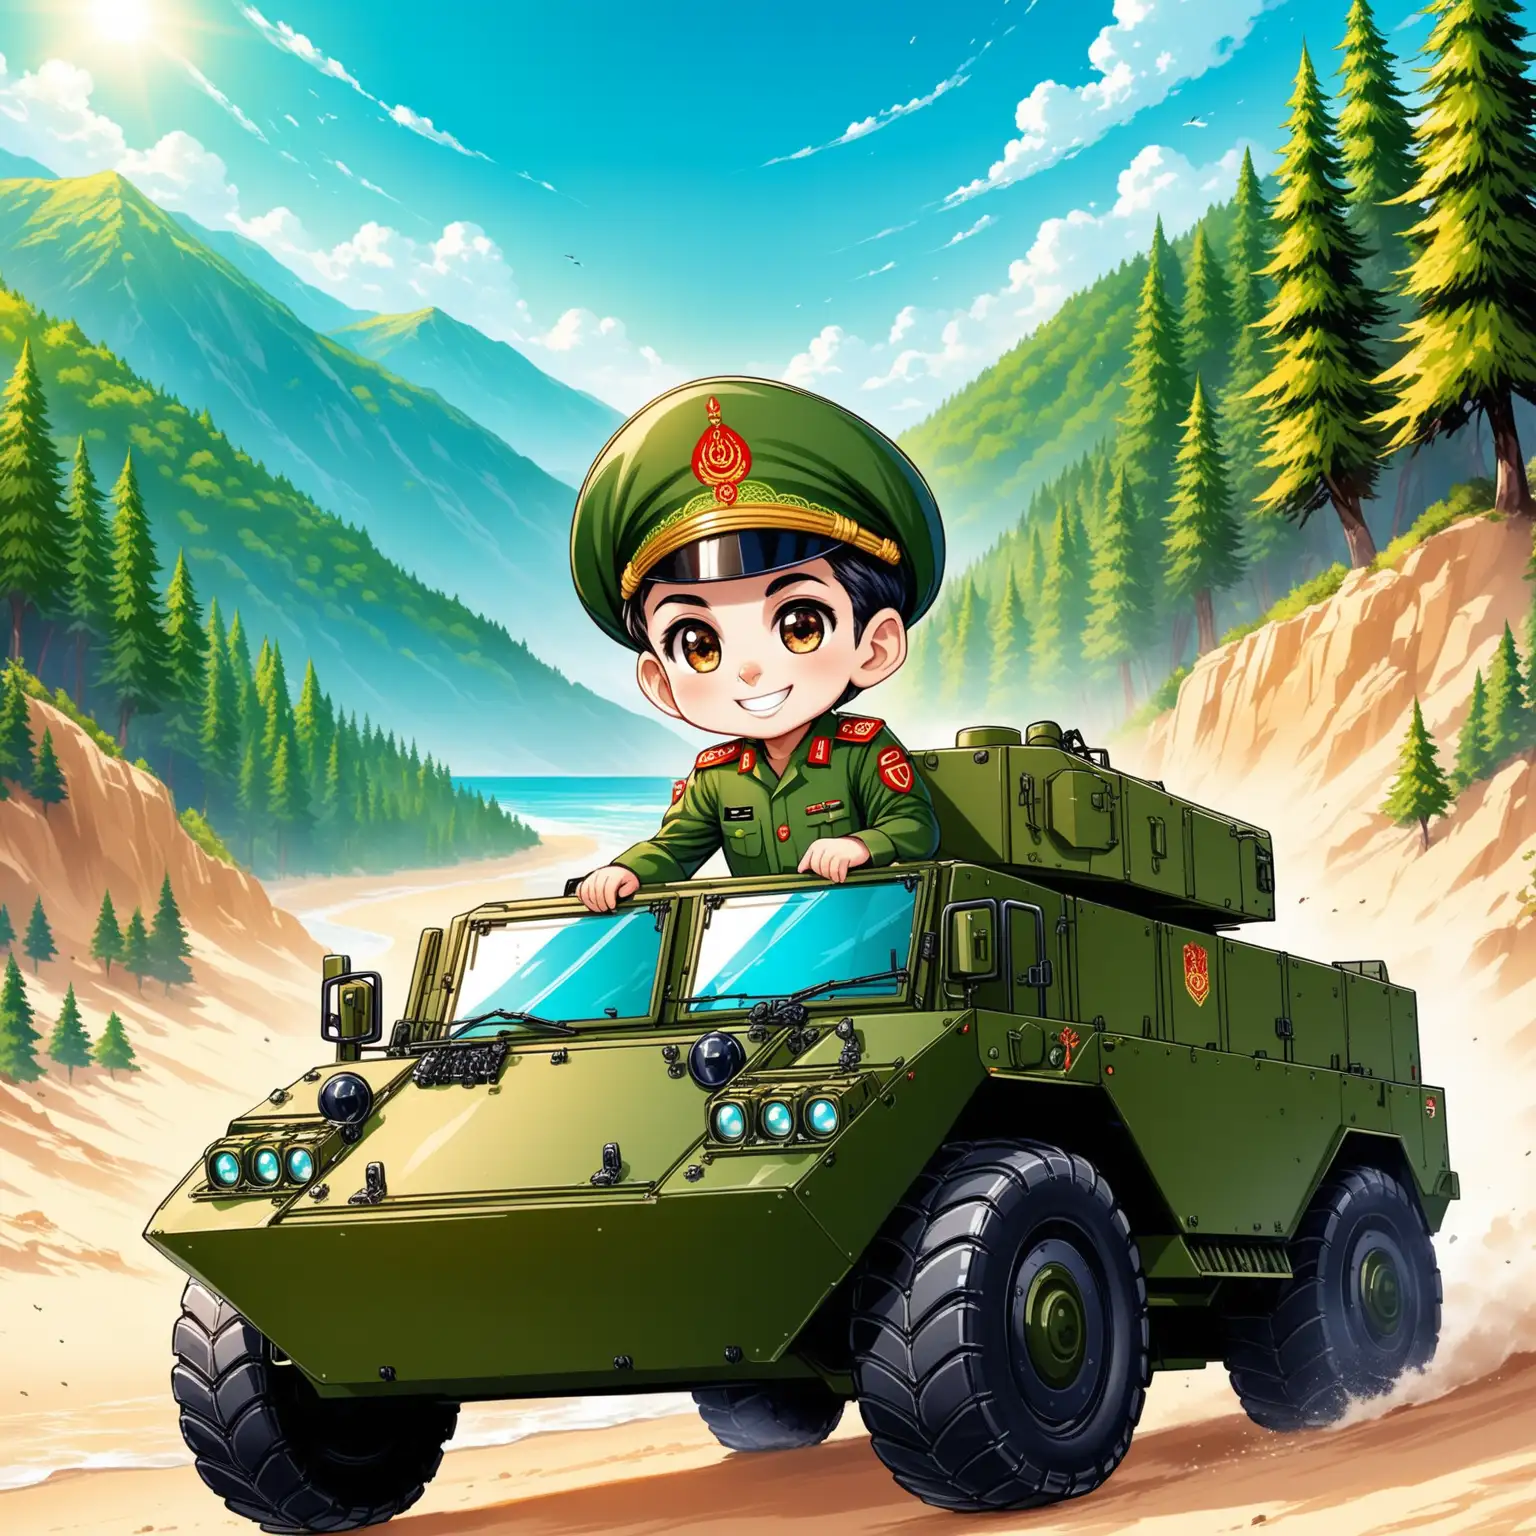 Heavenly Persian Warrior Boy Races Military Vehicle in Mountain Terrain